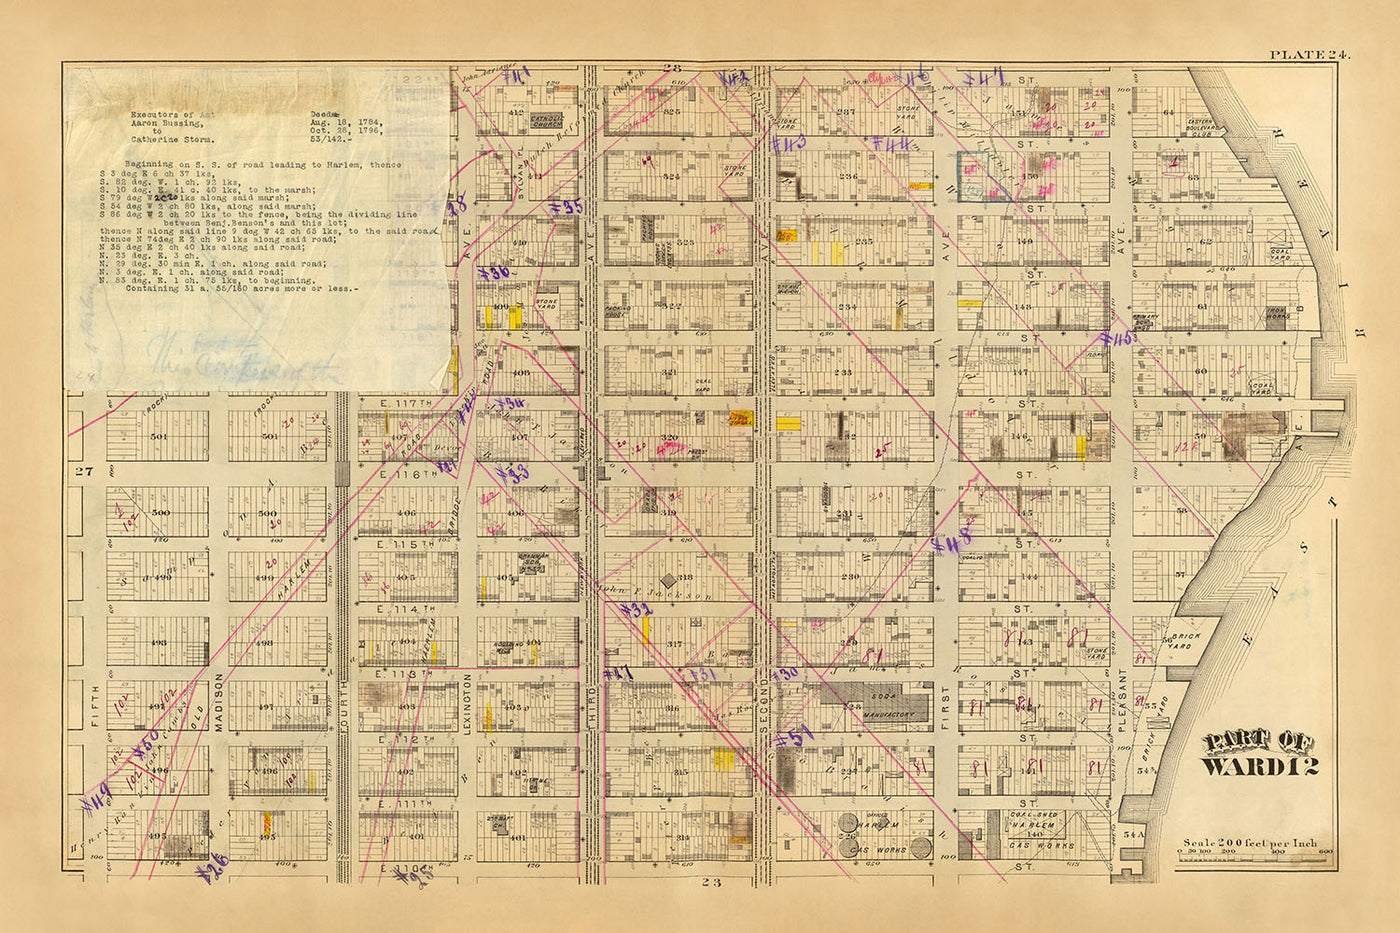 Alte Karte von East Harlem, New York City von Bromley, 1879: St. Paul's Catholic Church, Harlem Gas Works.